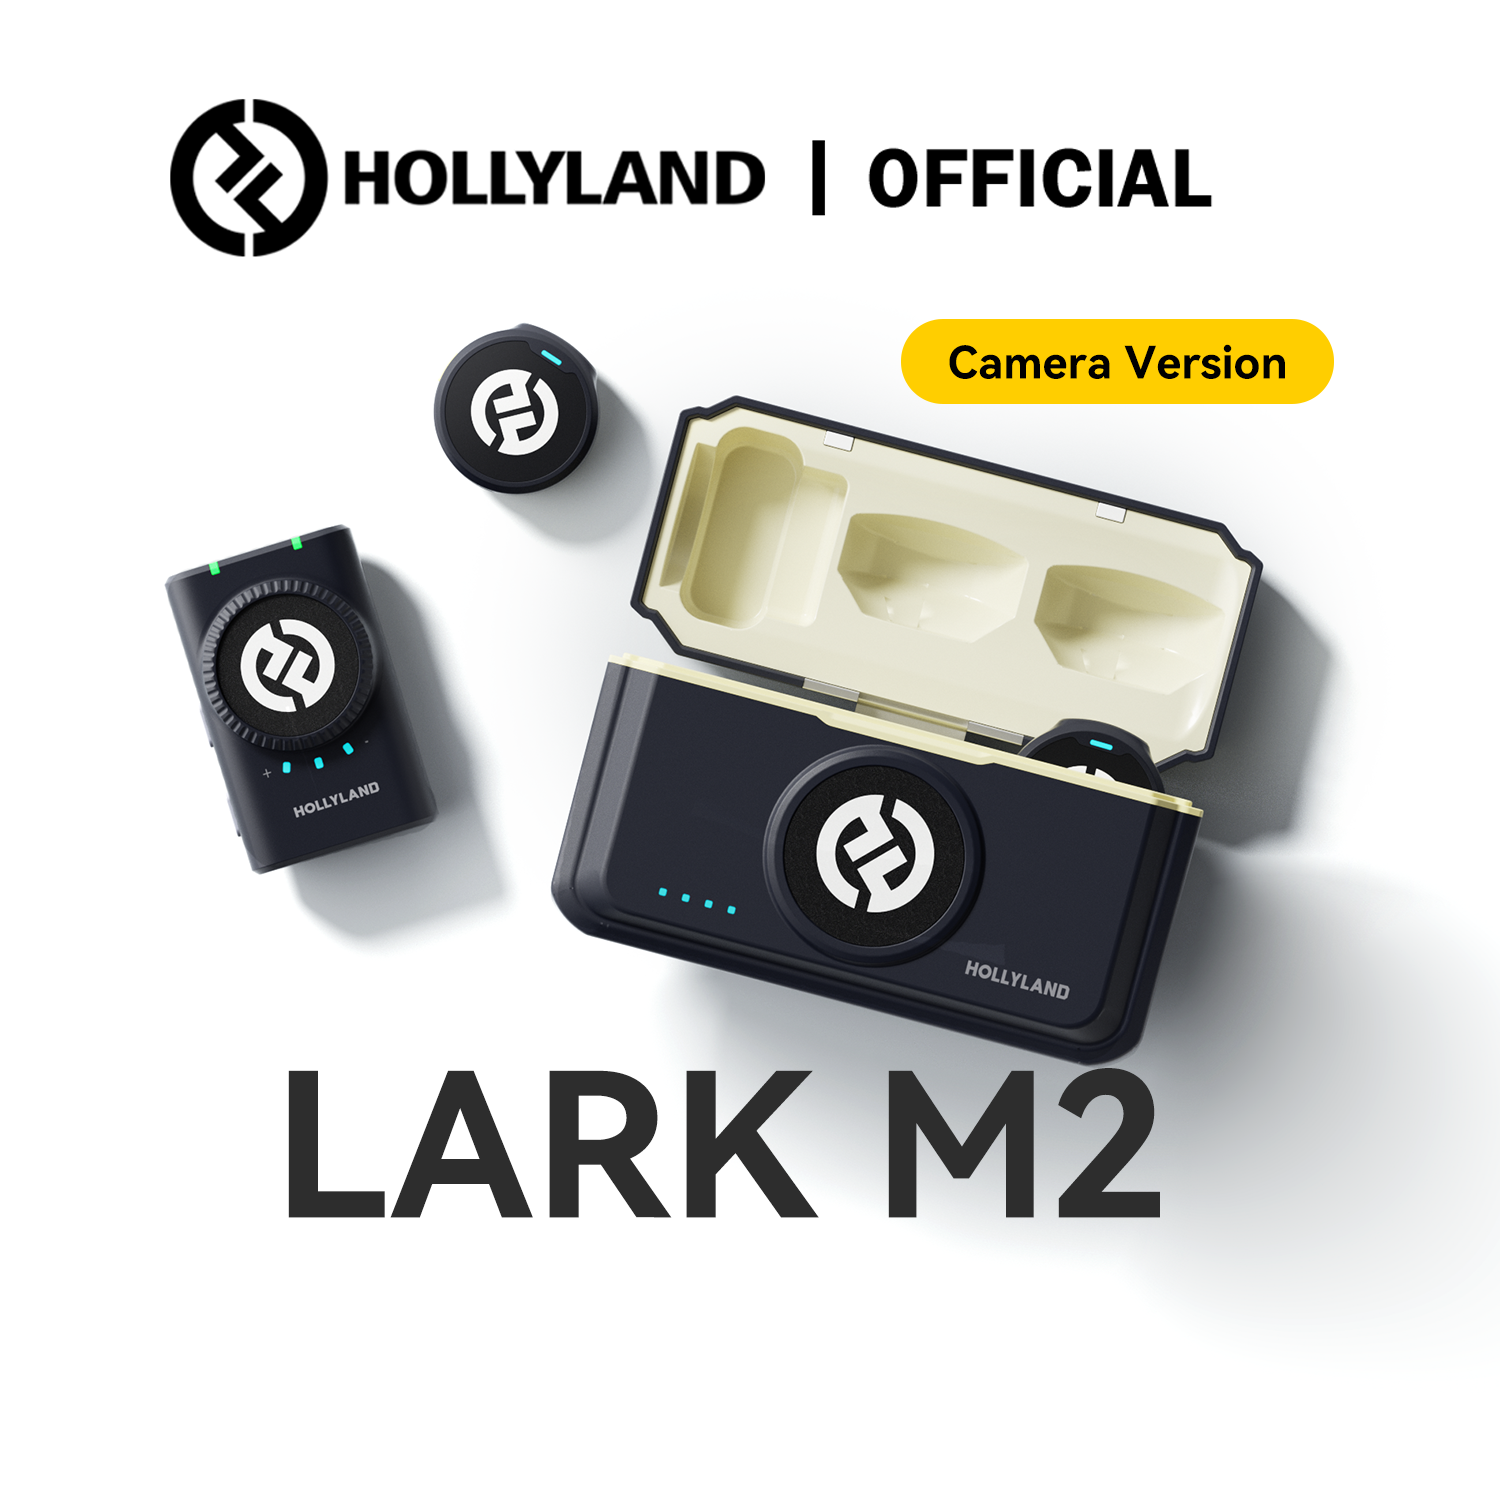 Hollyland LARK M2 Wireless Lavalier Microphone Camera Version 300m